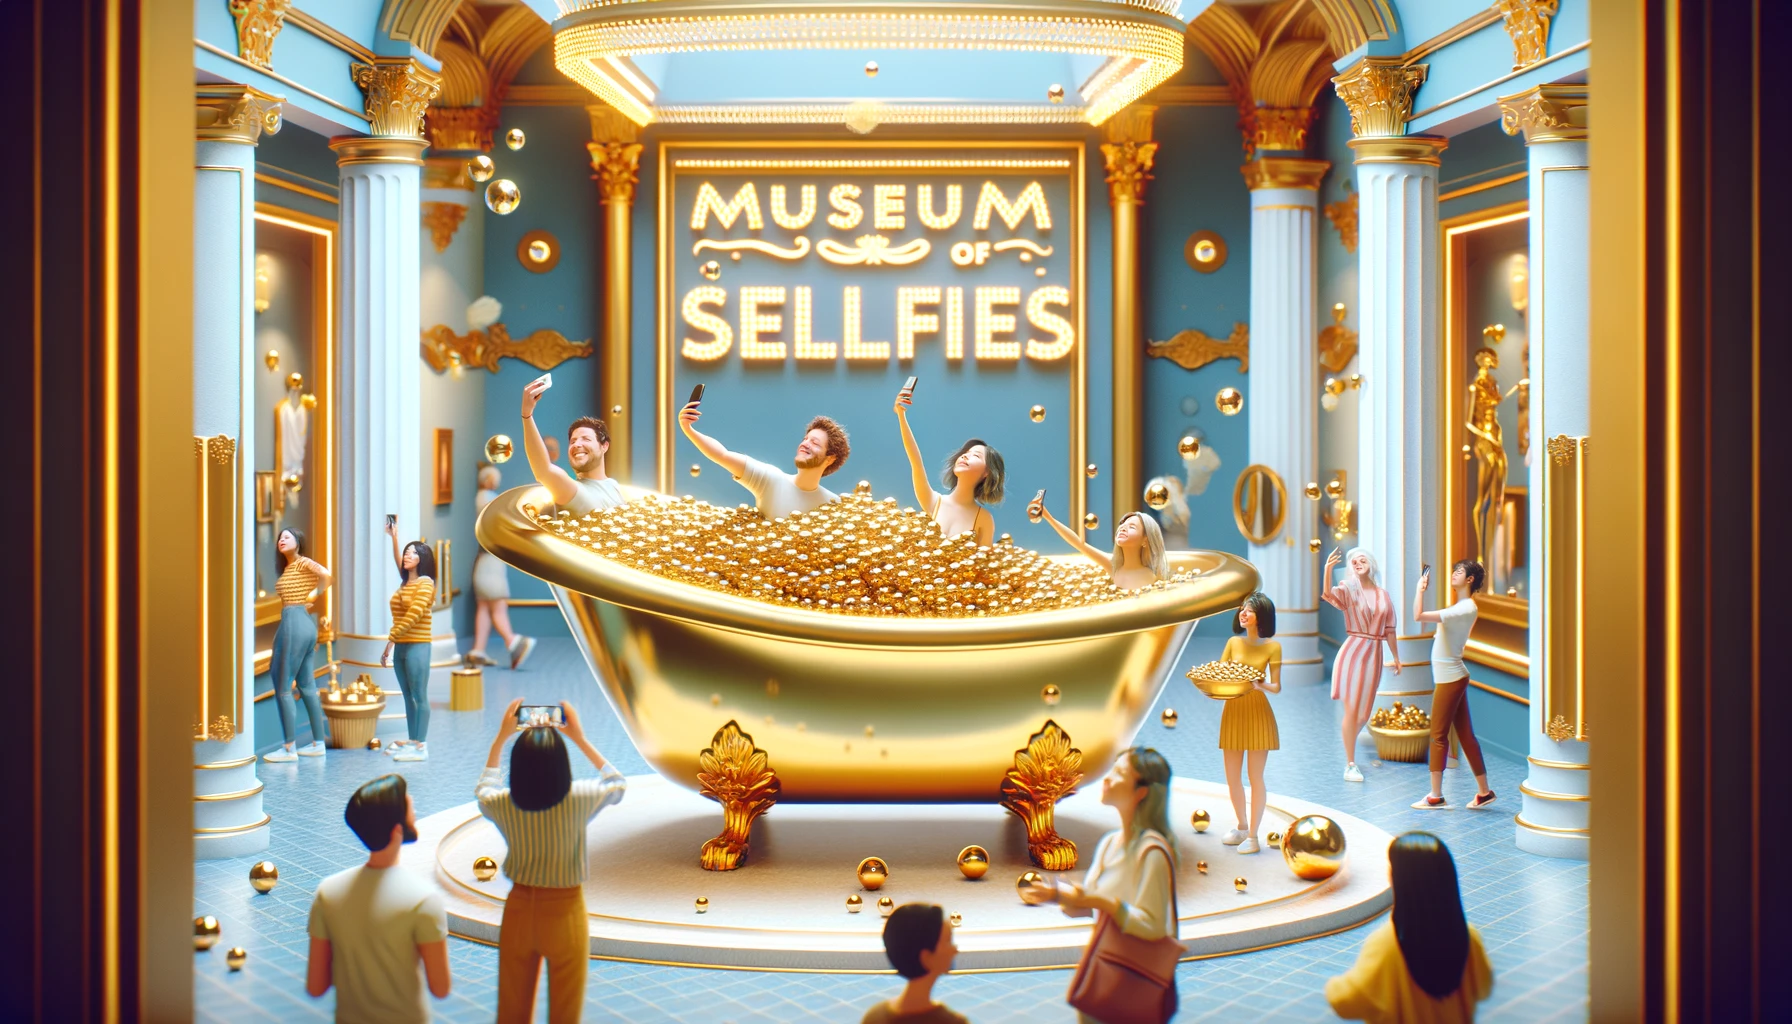 Image depicting a dynamic scene inside the Museum of Selfies in Las Vegas, focused on the golden bathtub exhibit